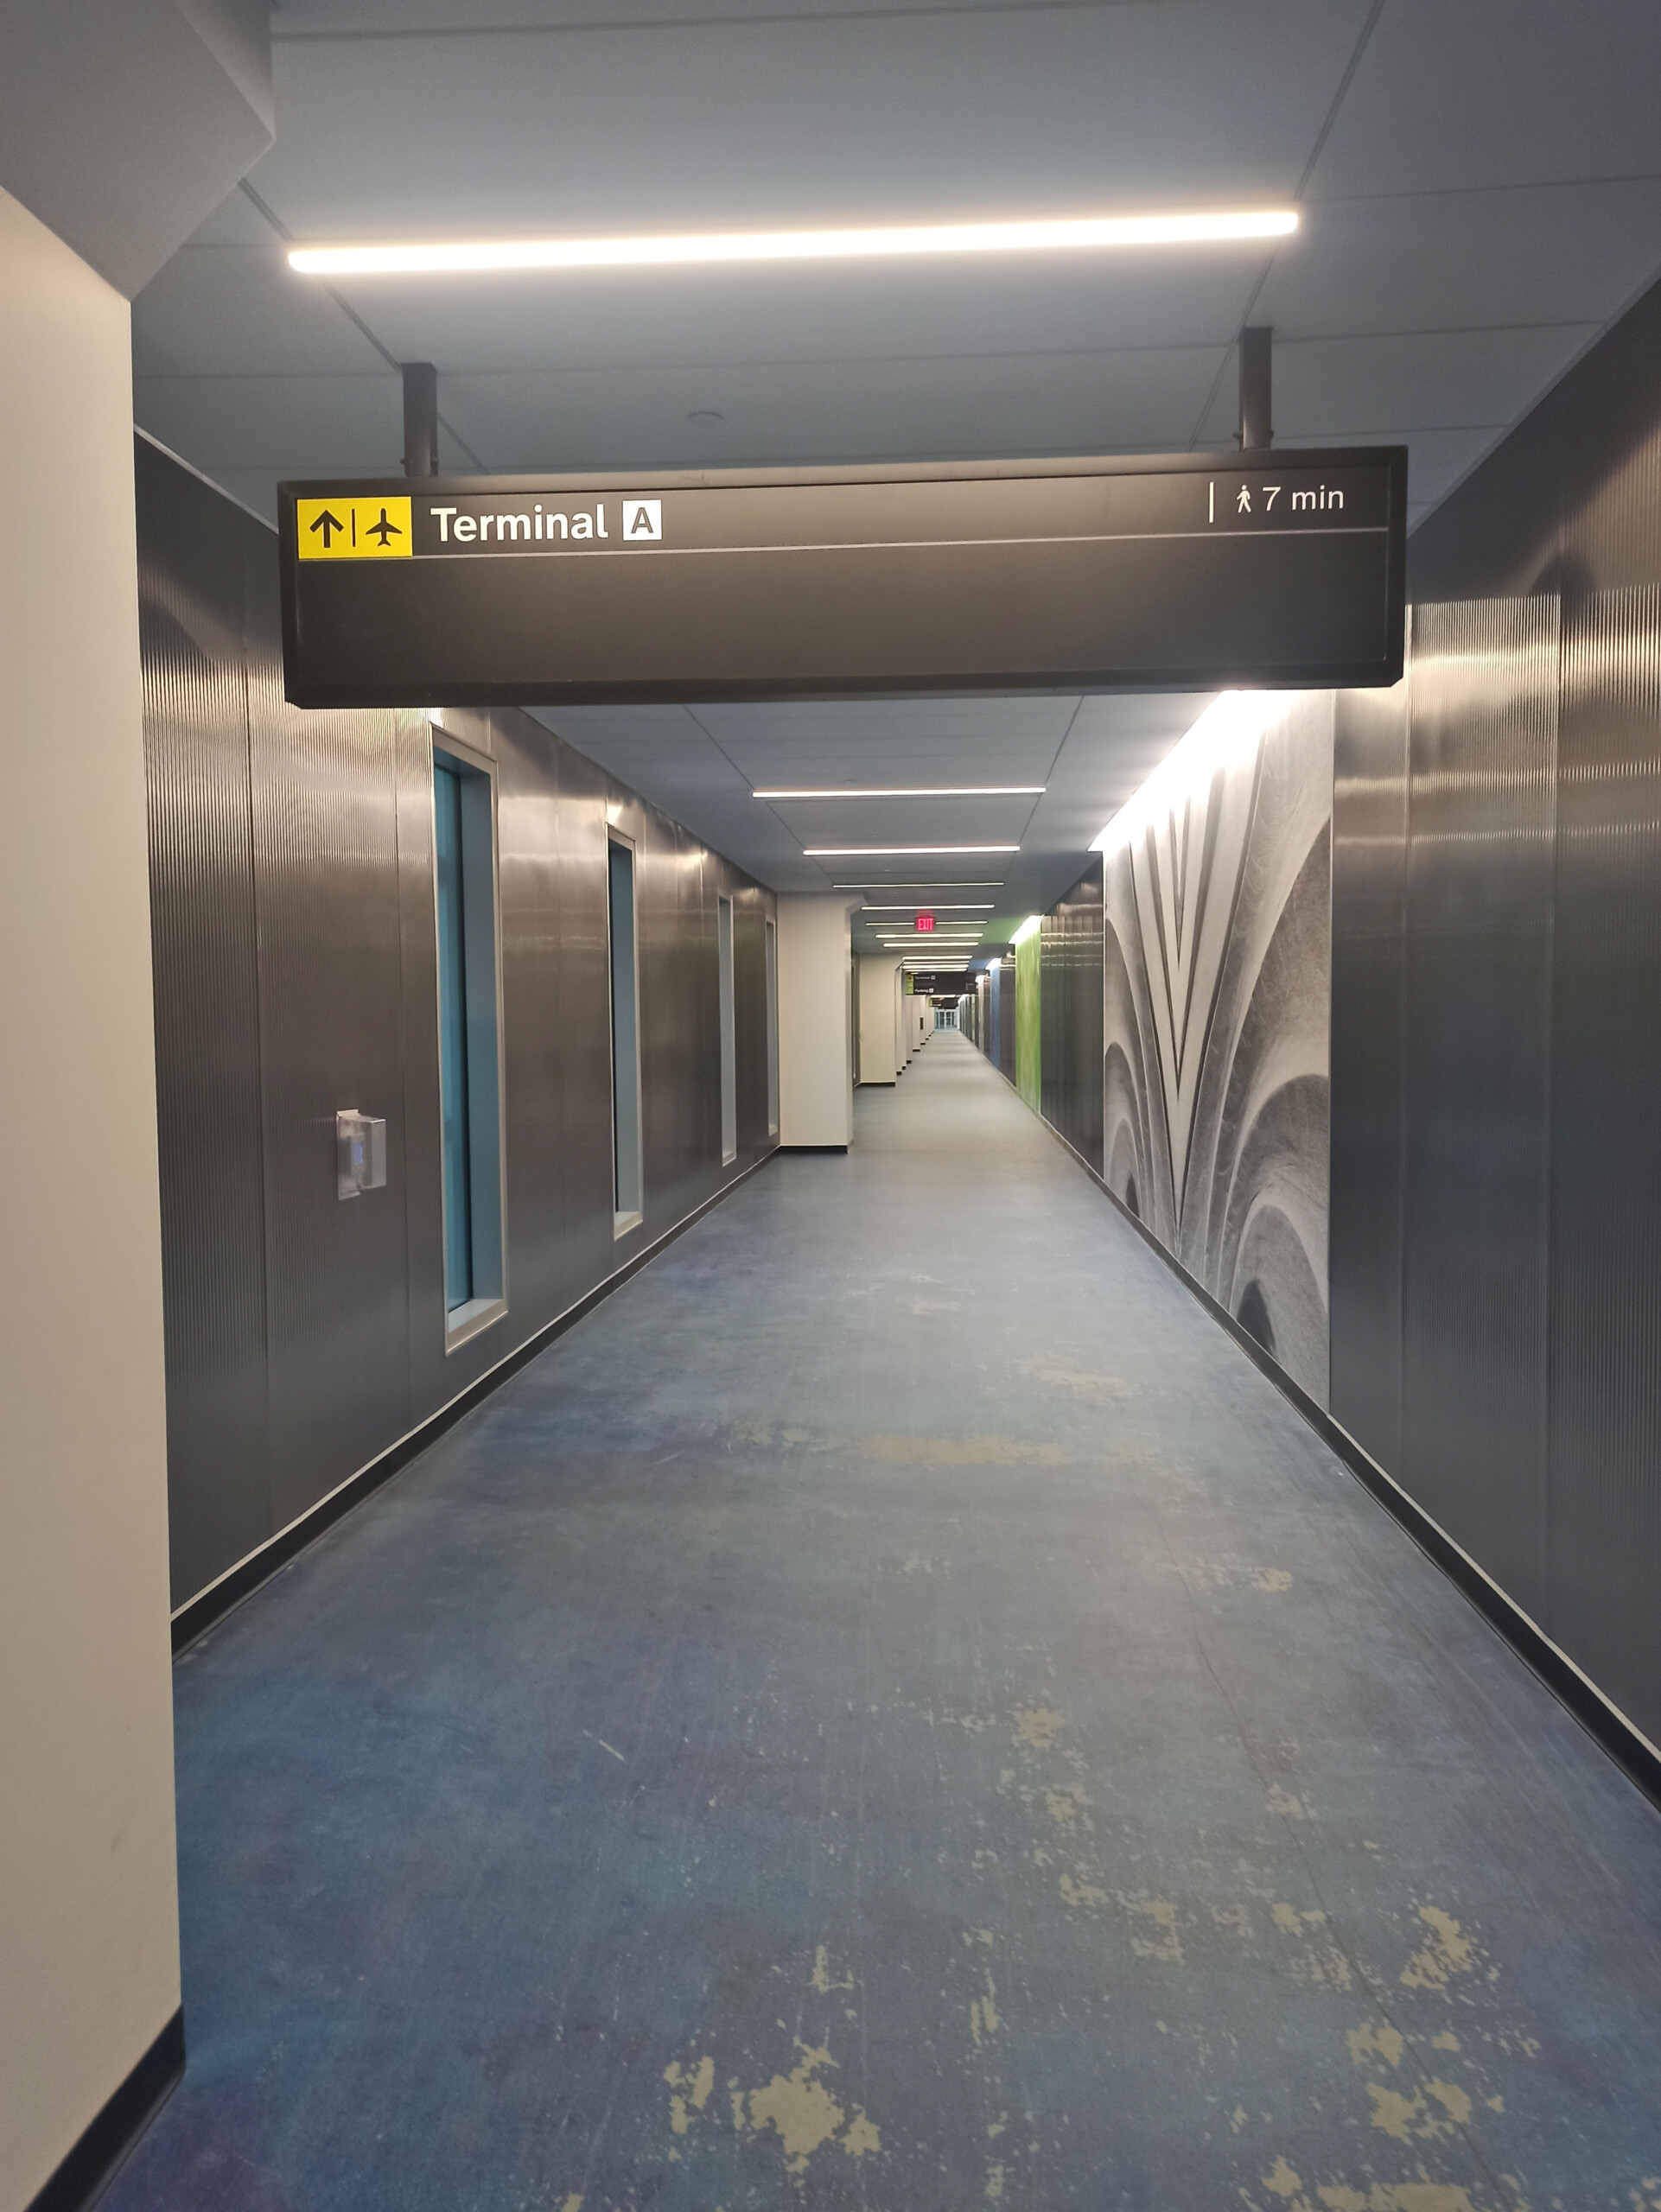 AirTrain passageway to Terminal A